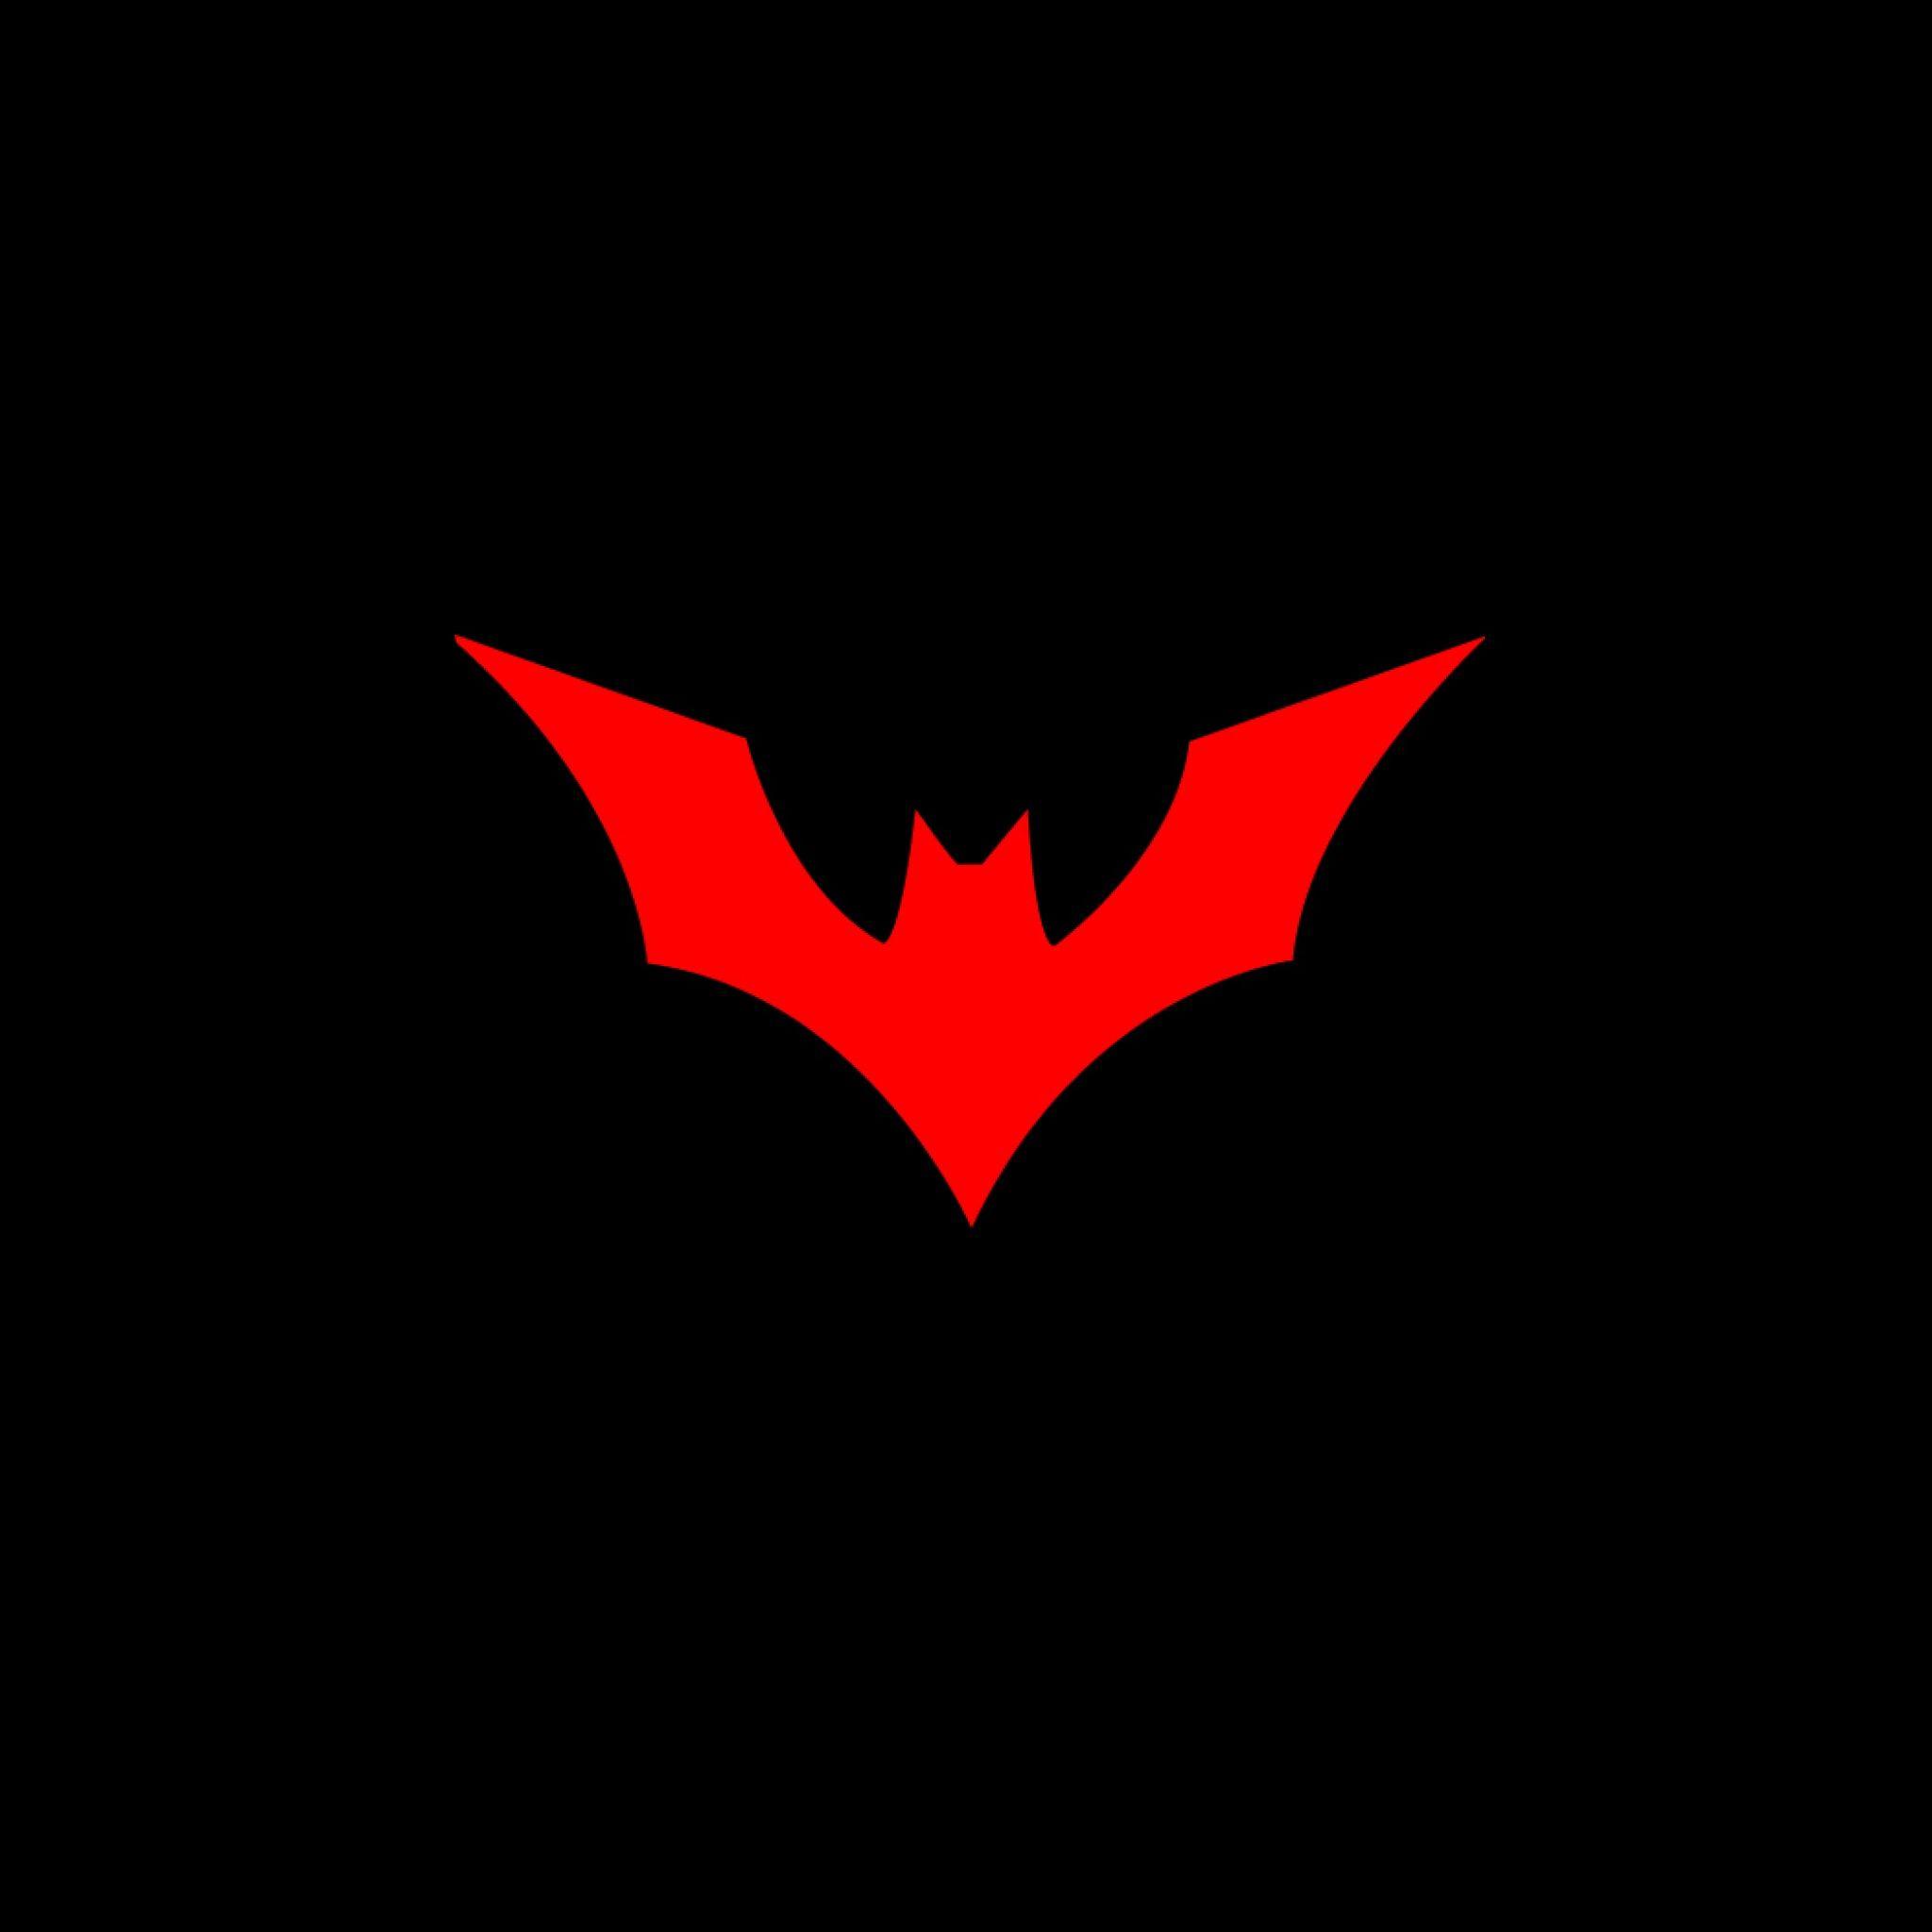 Black and Red Batman Logo - Download Red Batman Logo 2048 x 2048 Wallpapers - 4608483 - black ...